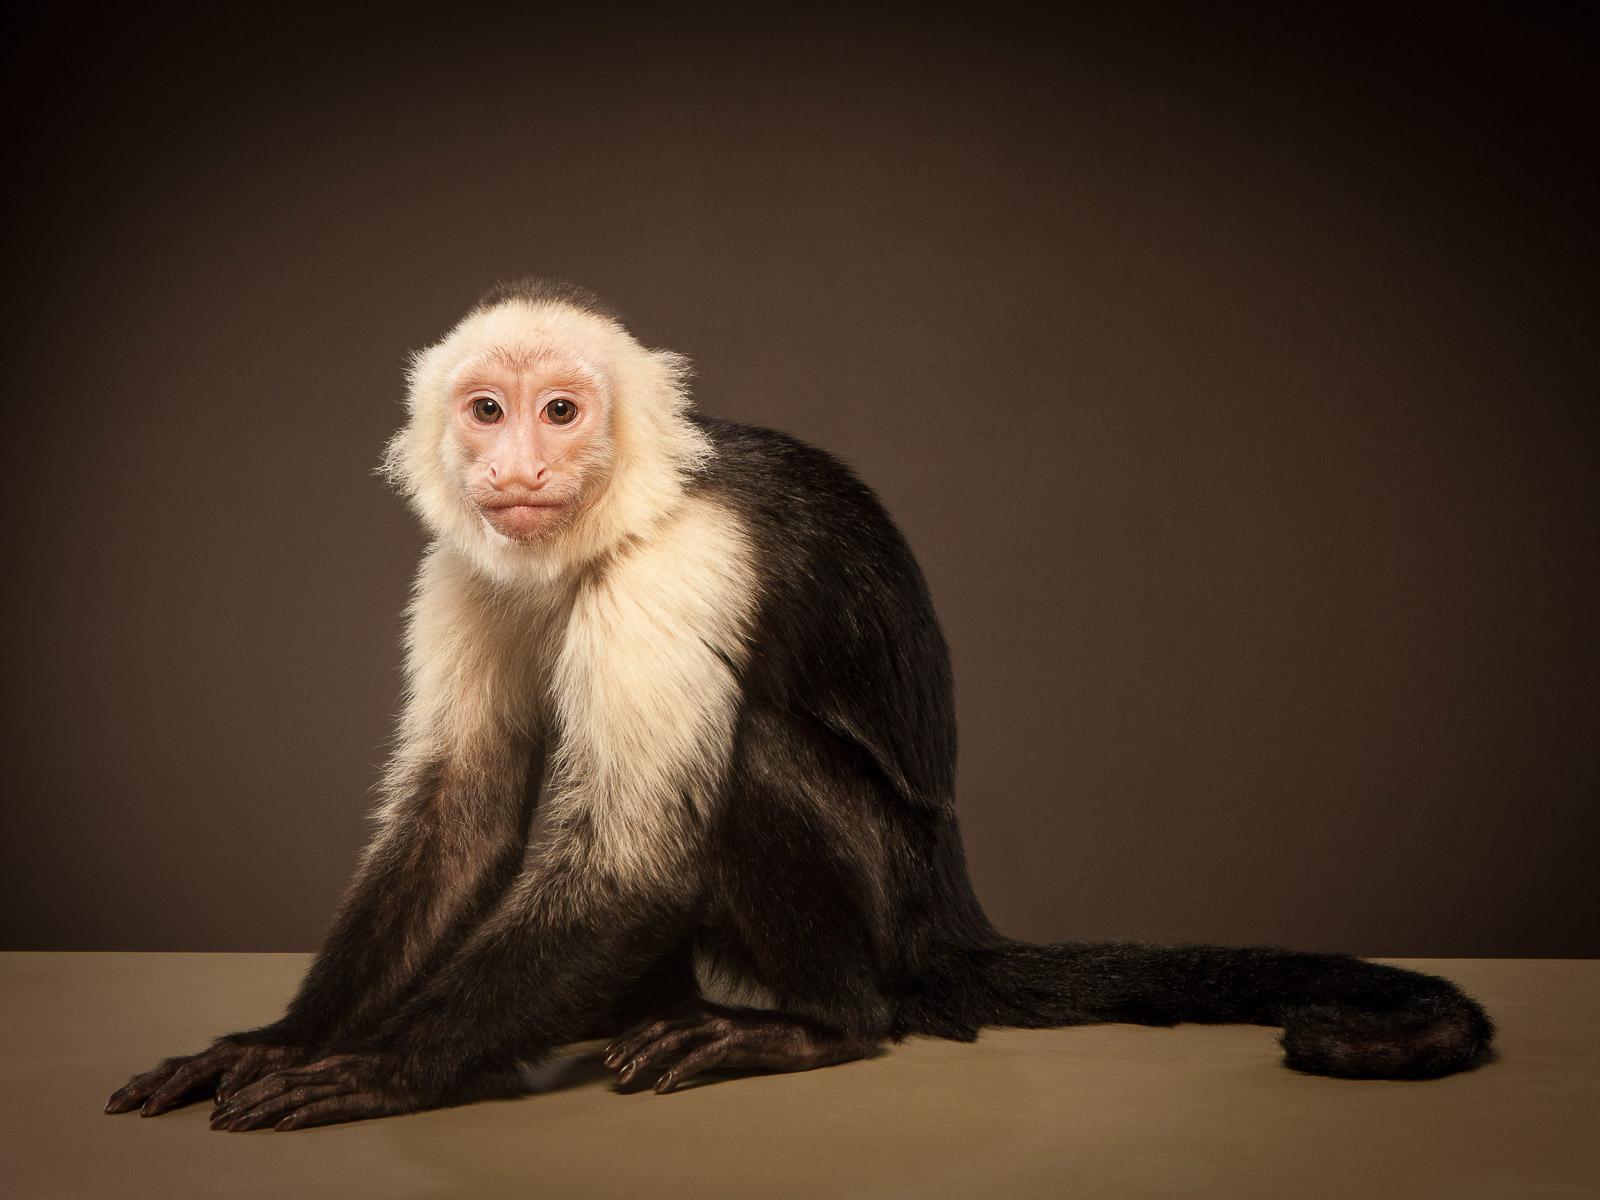 Tim Platt Color Photograph - Signed limited edition animal fine art print, brown white monkey - Capuchin 1